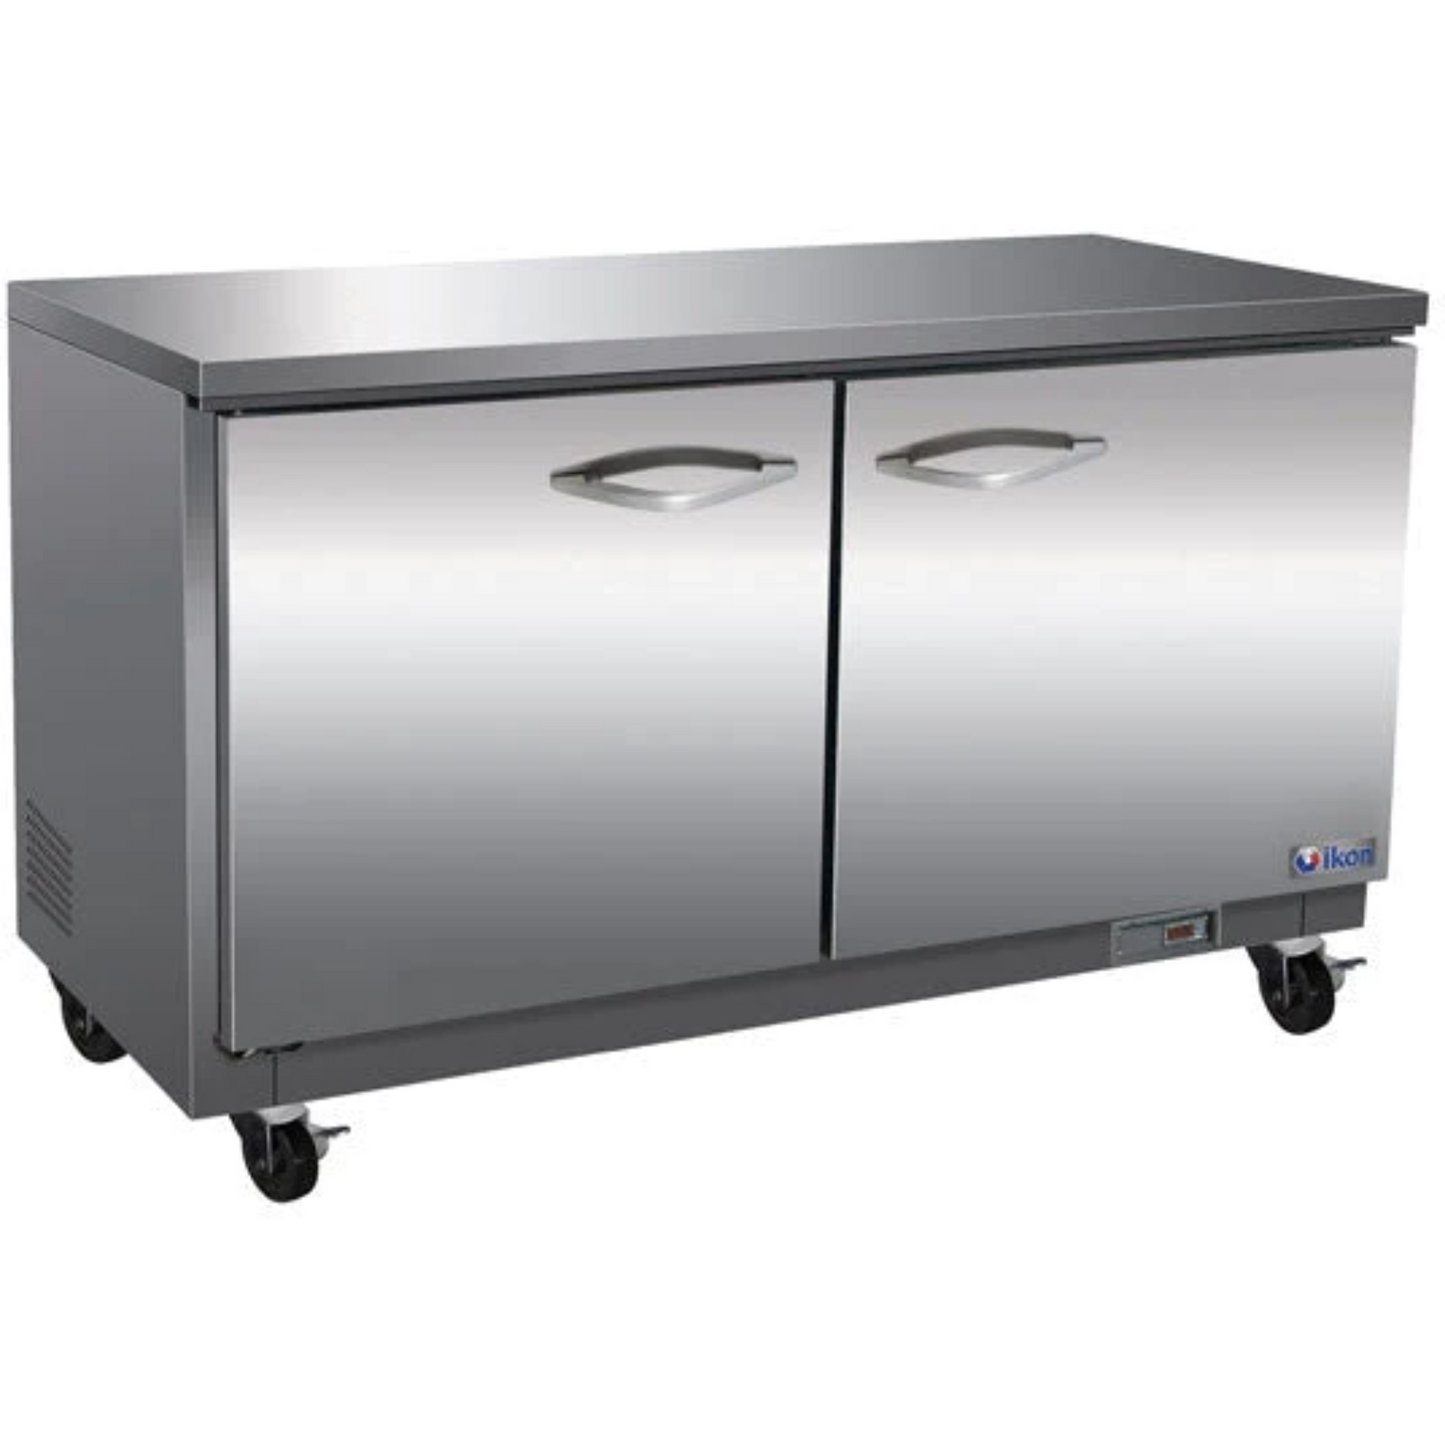 IKON IUC61R 61" Undercounter Refrigerator